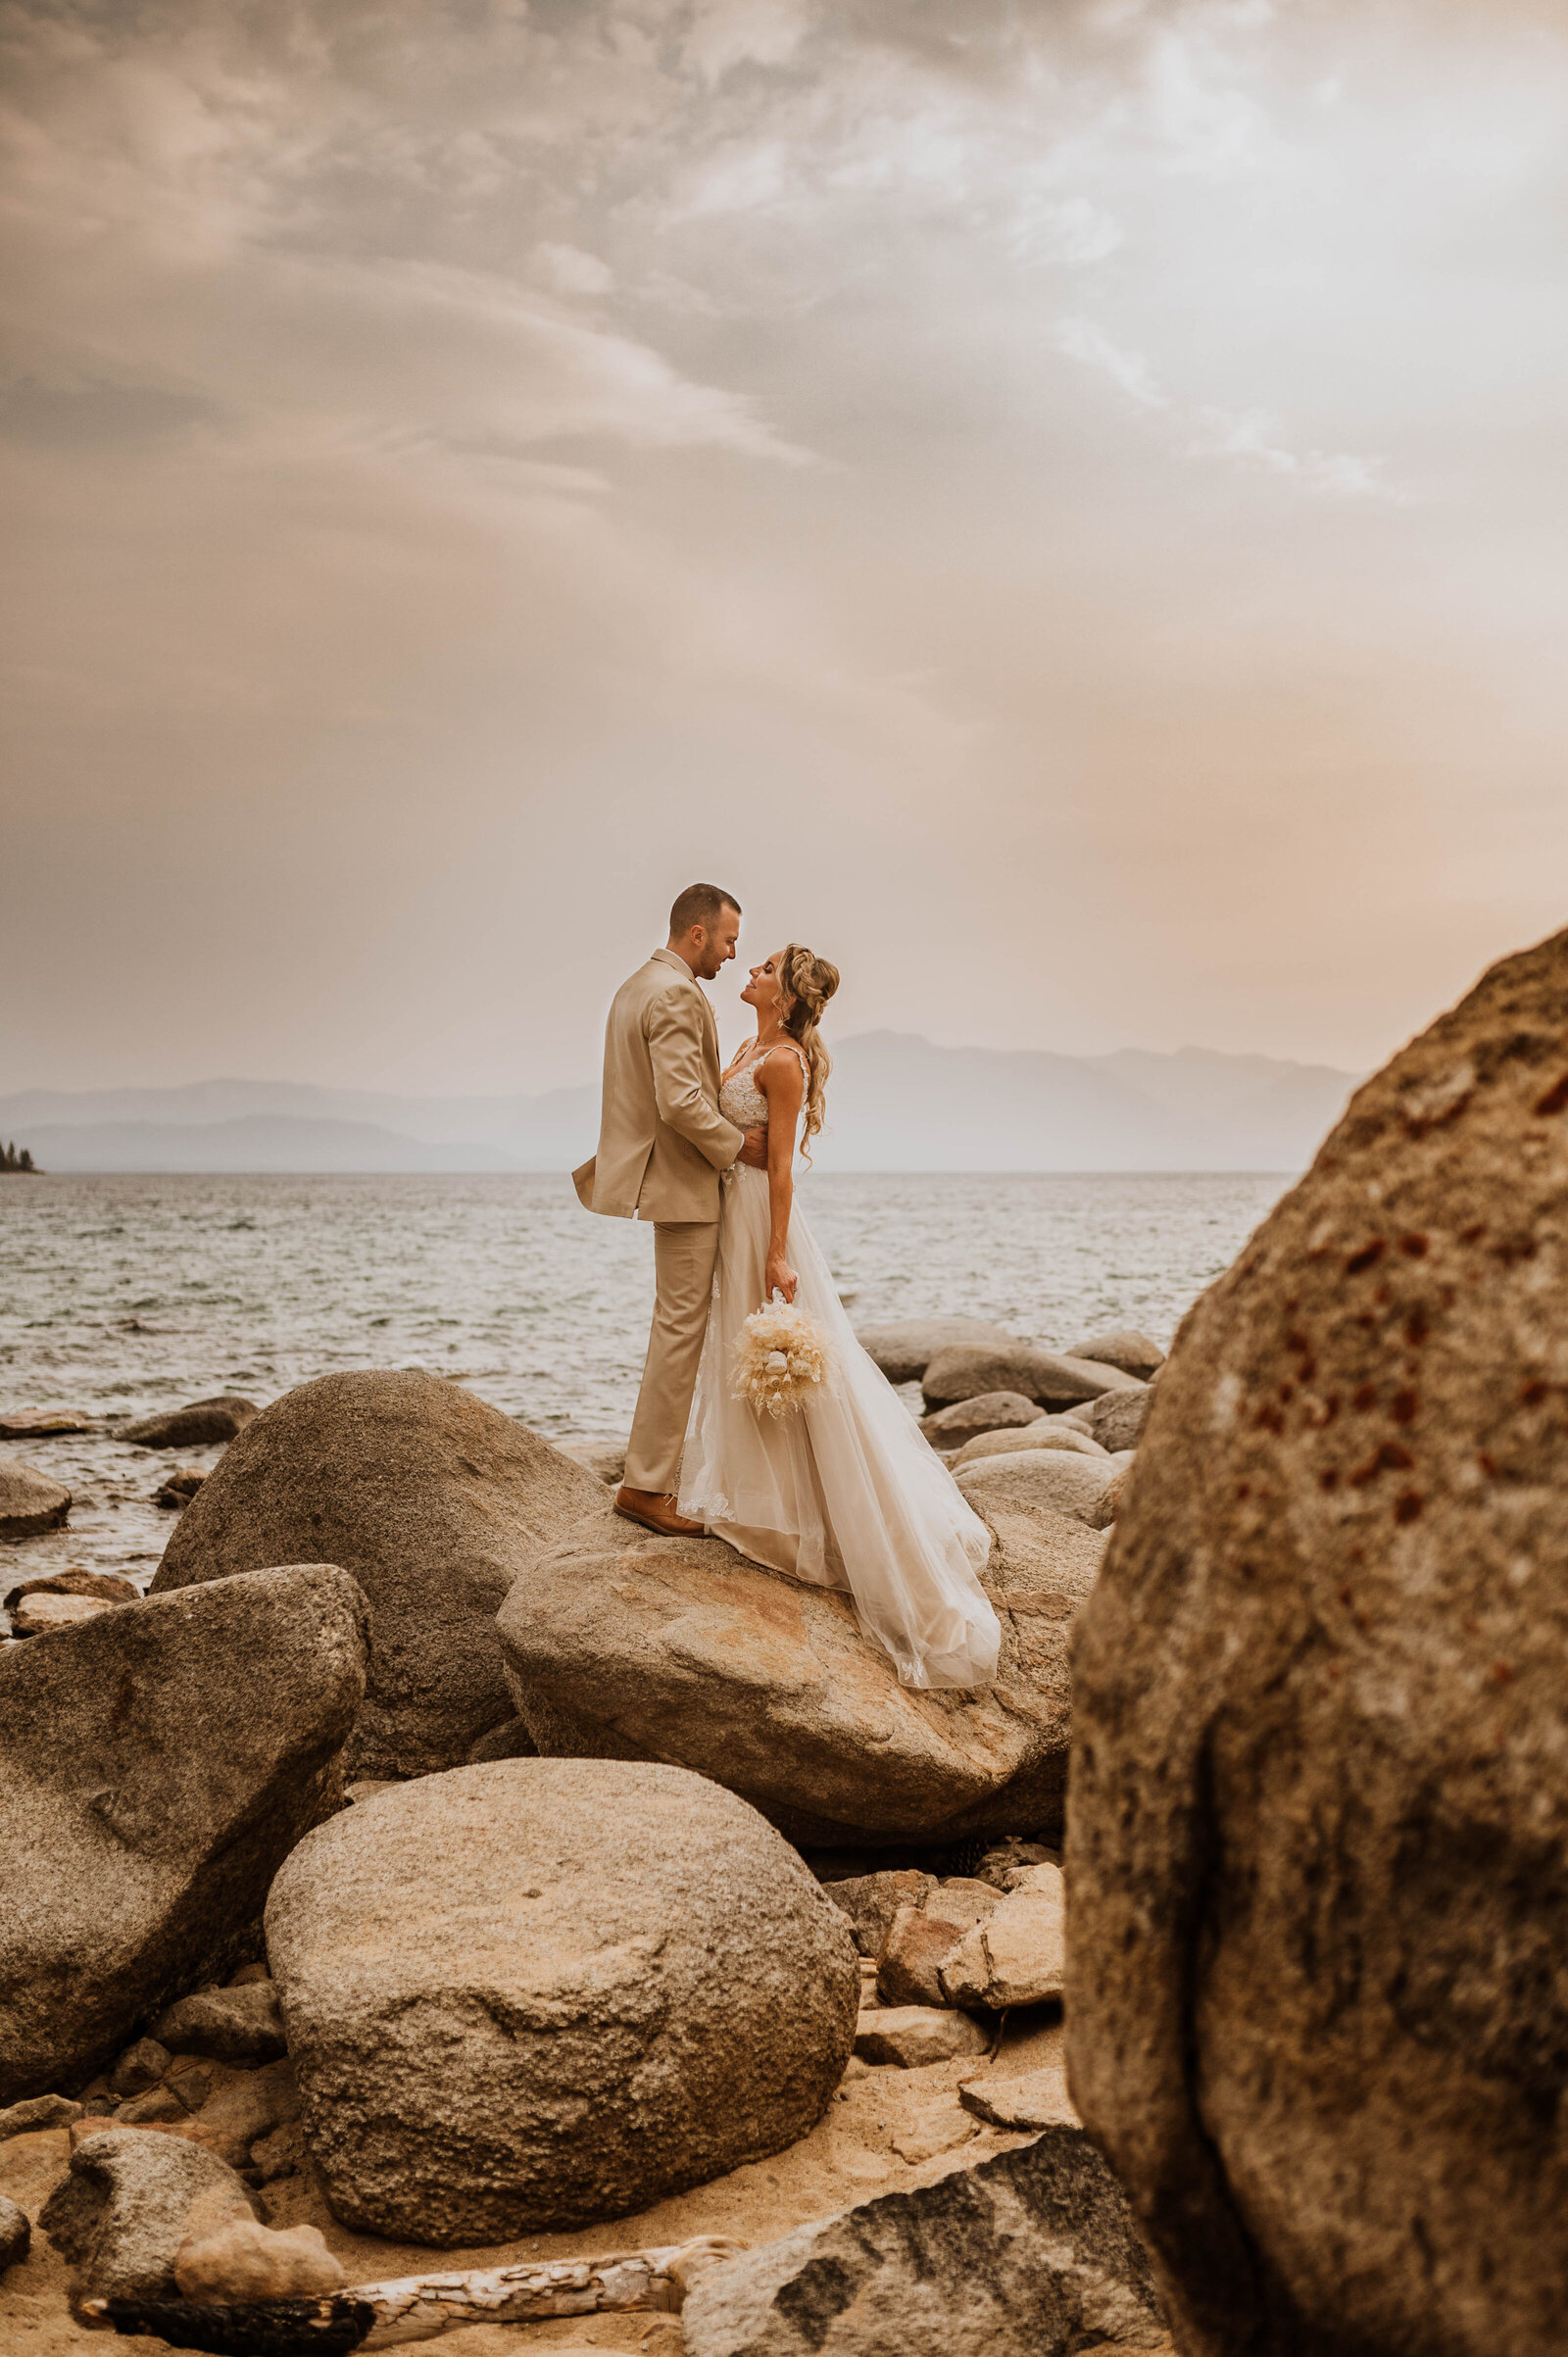 Tahoe wedding photography, wedding photographer in Tahoe, professional wedding photos